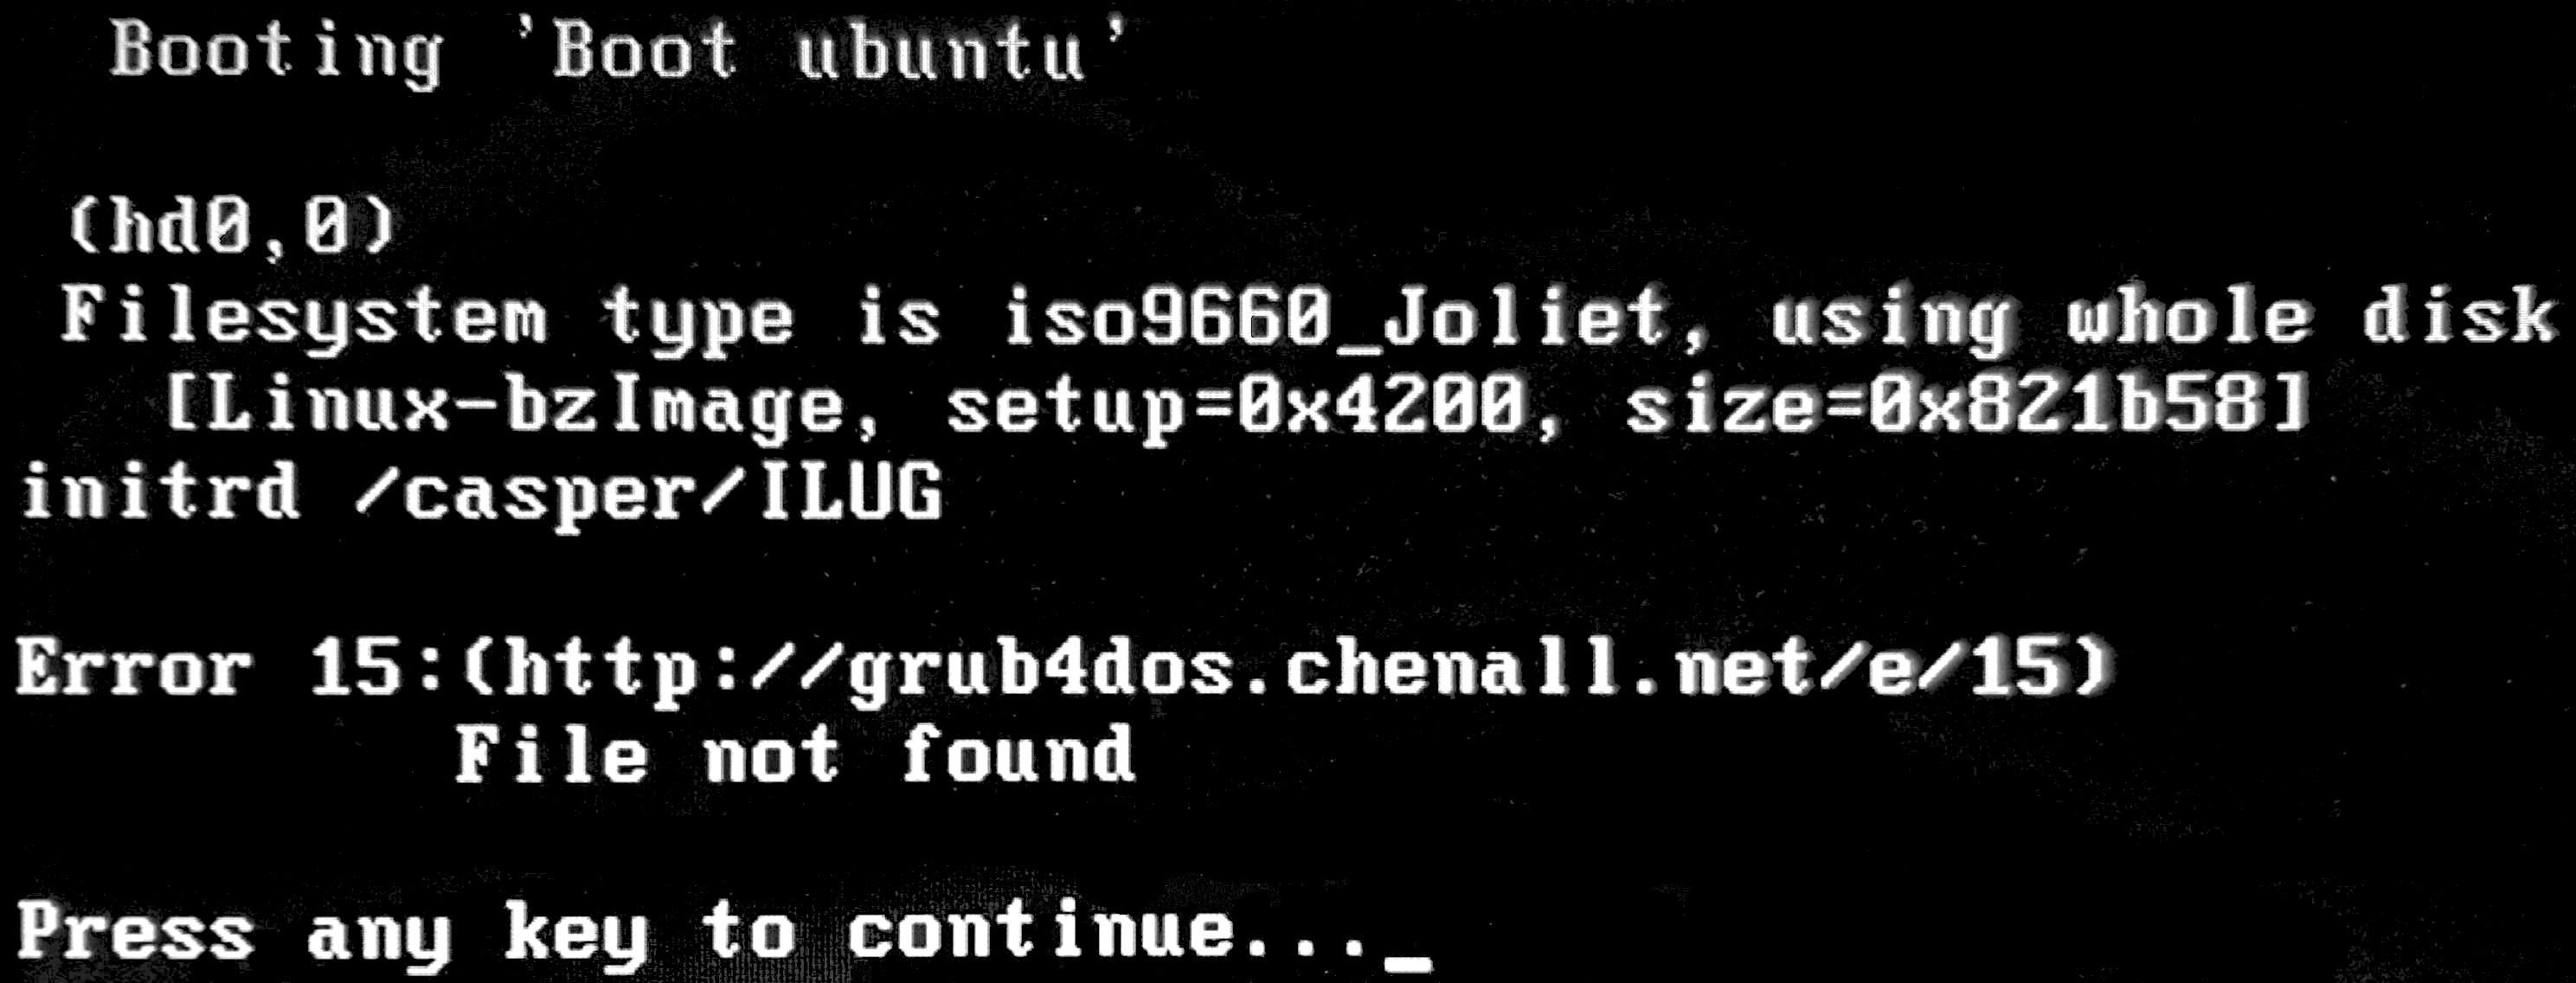 grub 21 błąd linux